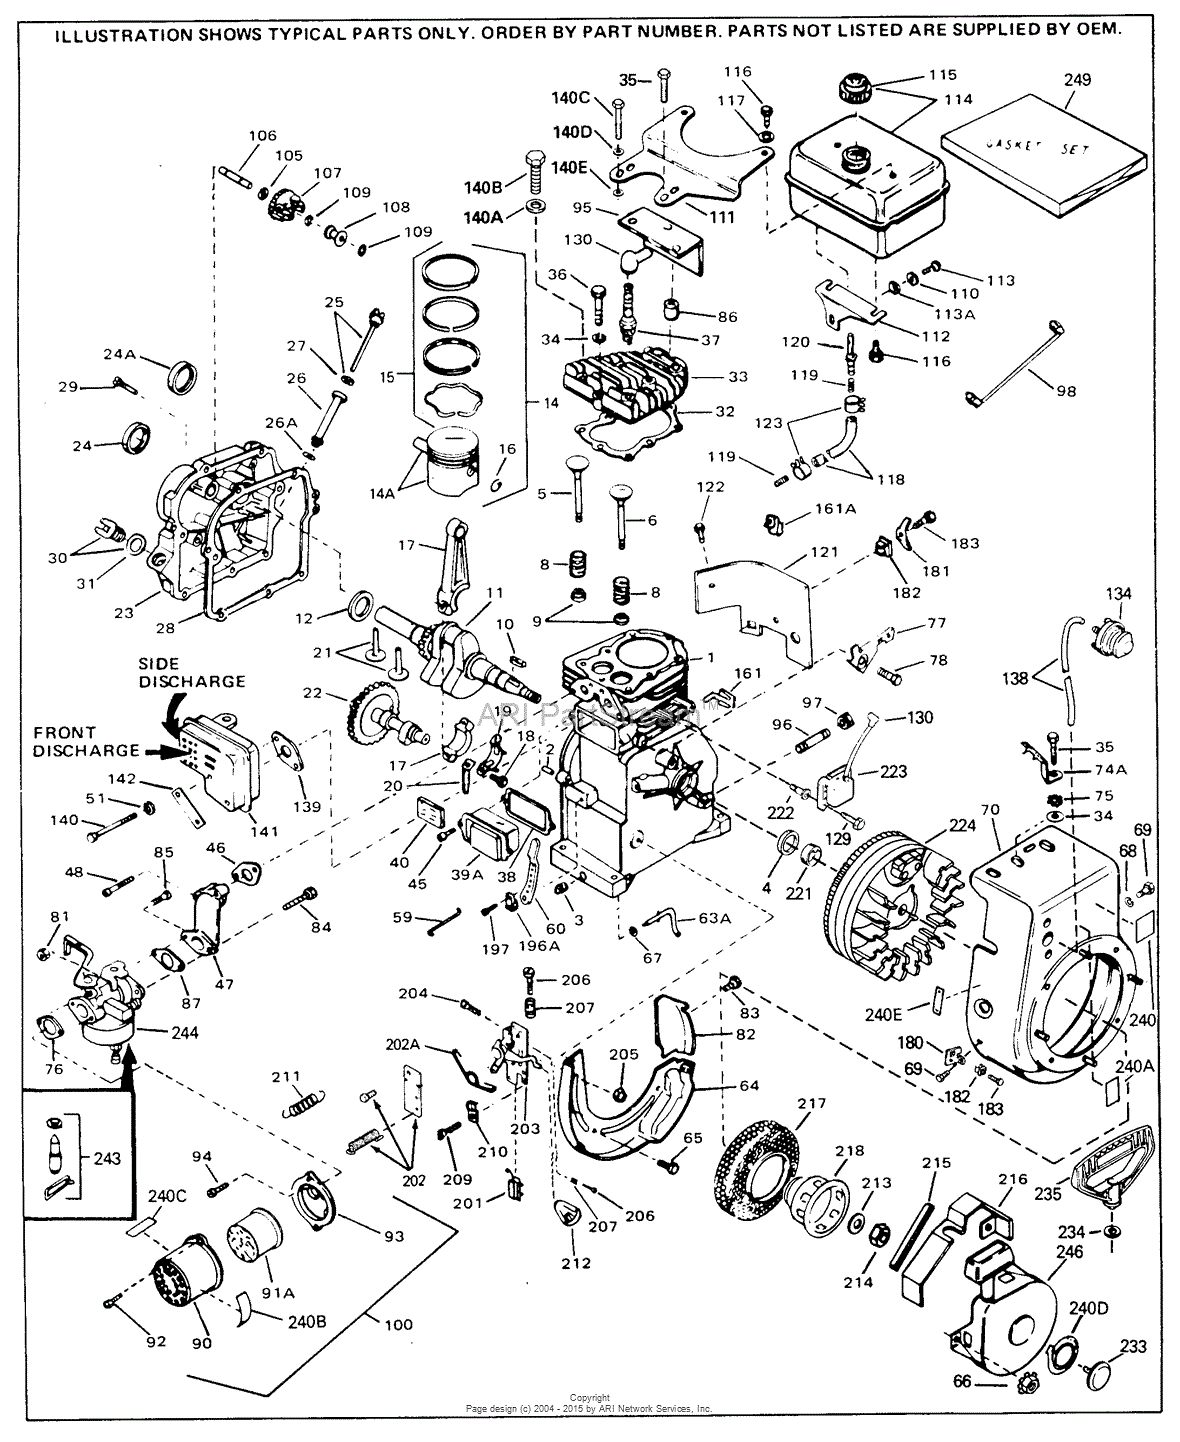 Tecumseh Engine Model Tvm220 Wiring Diagram